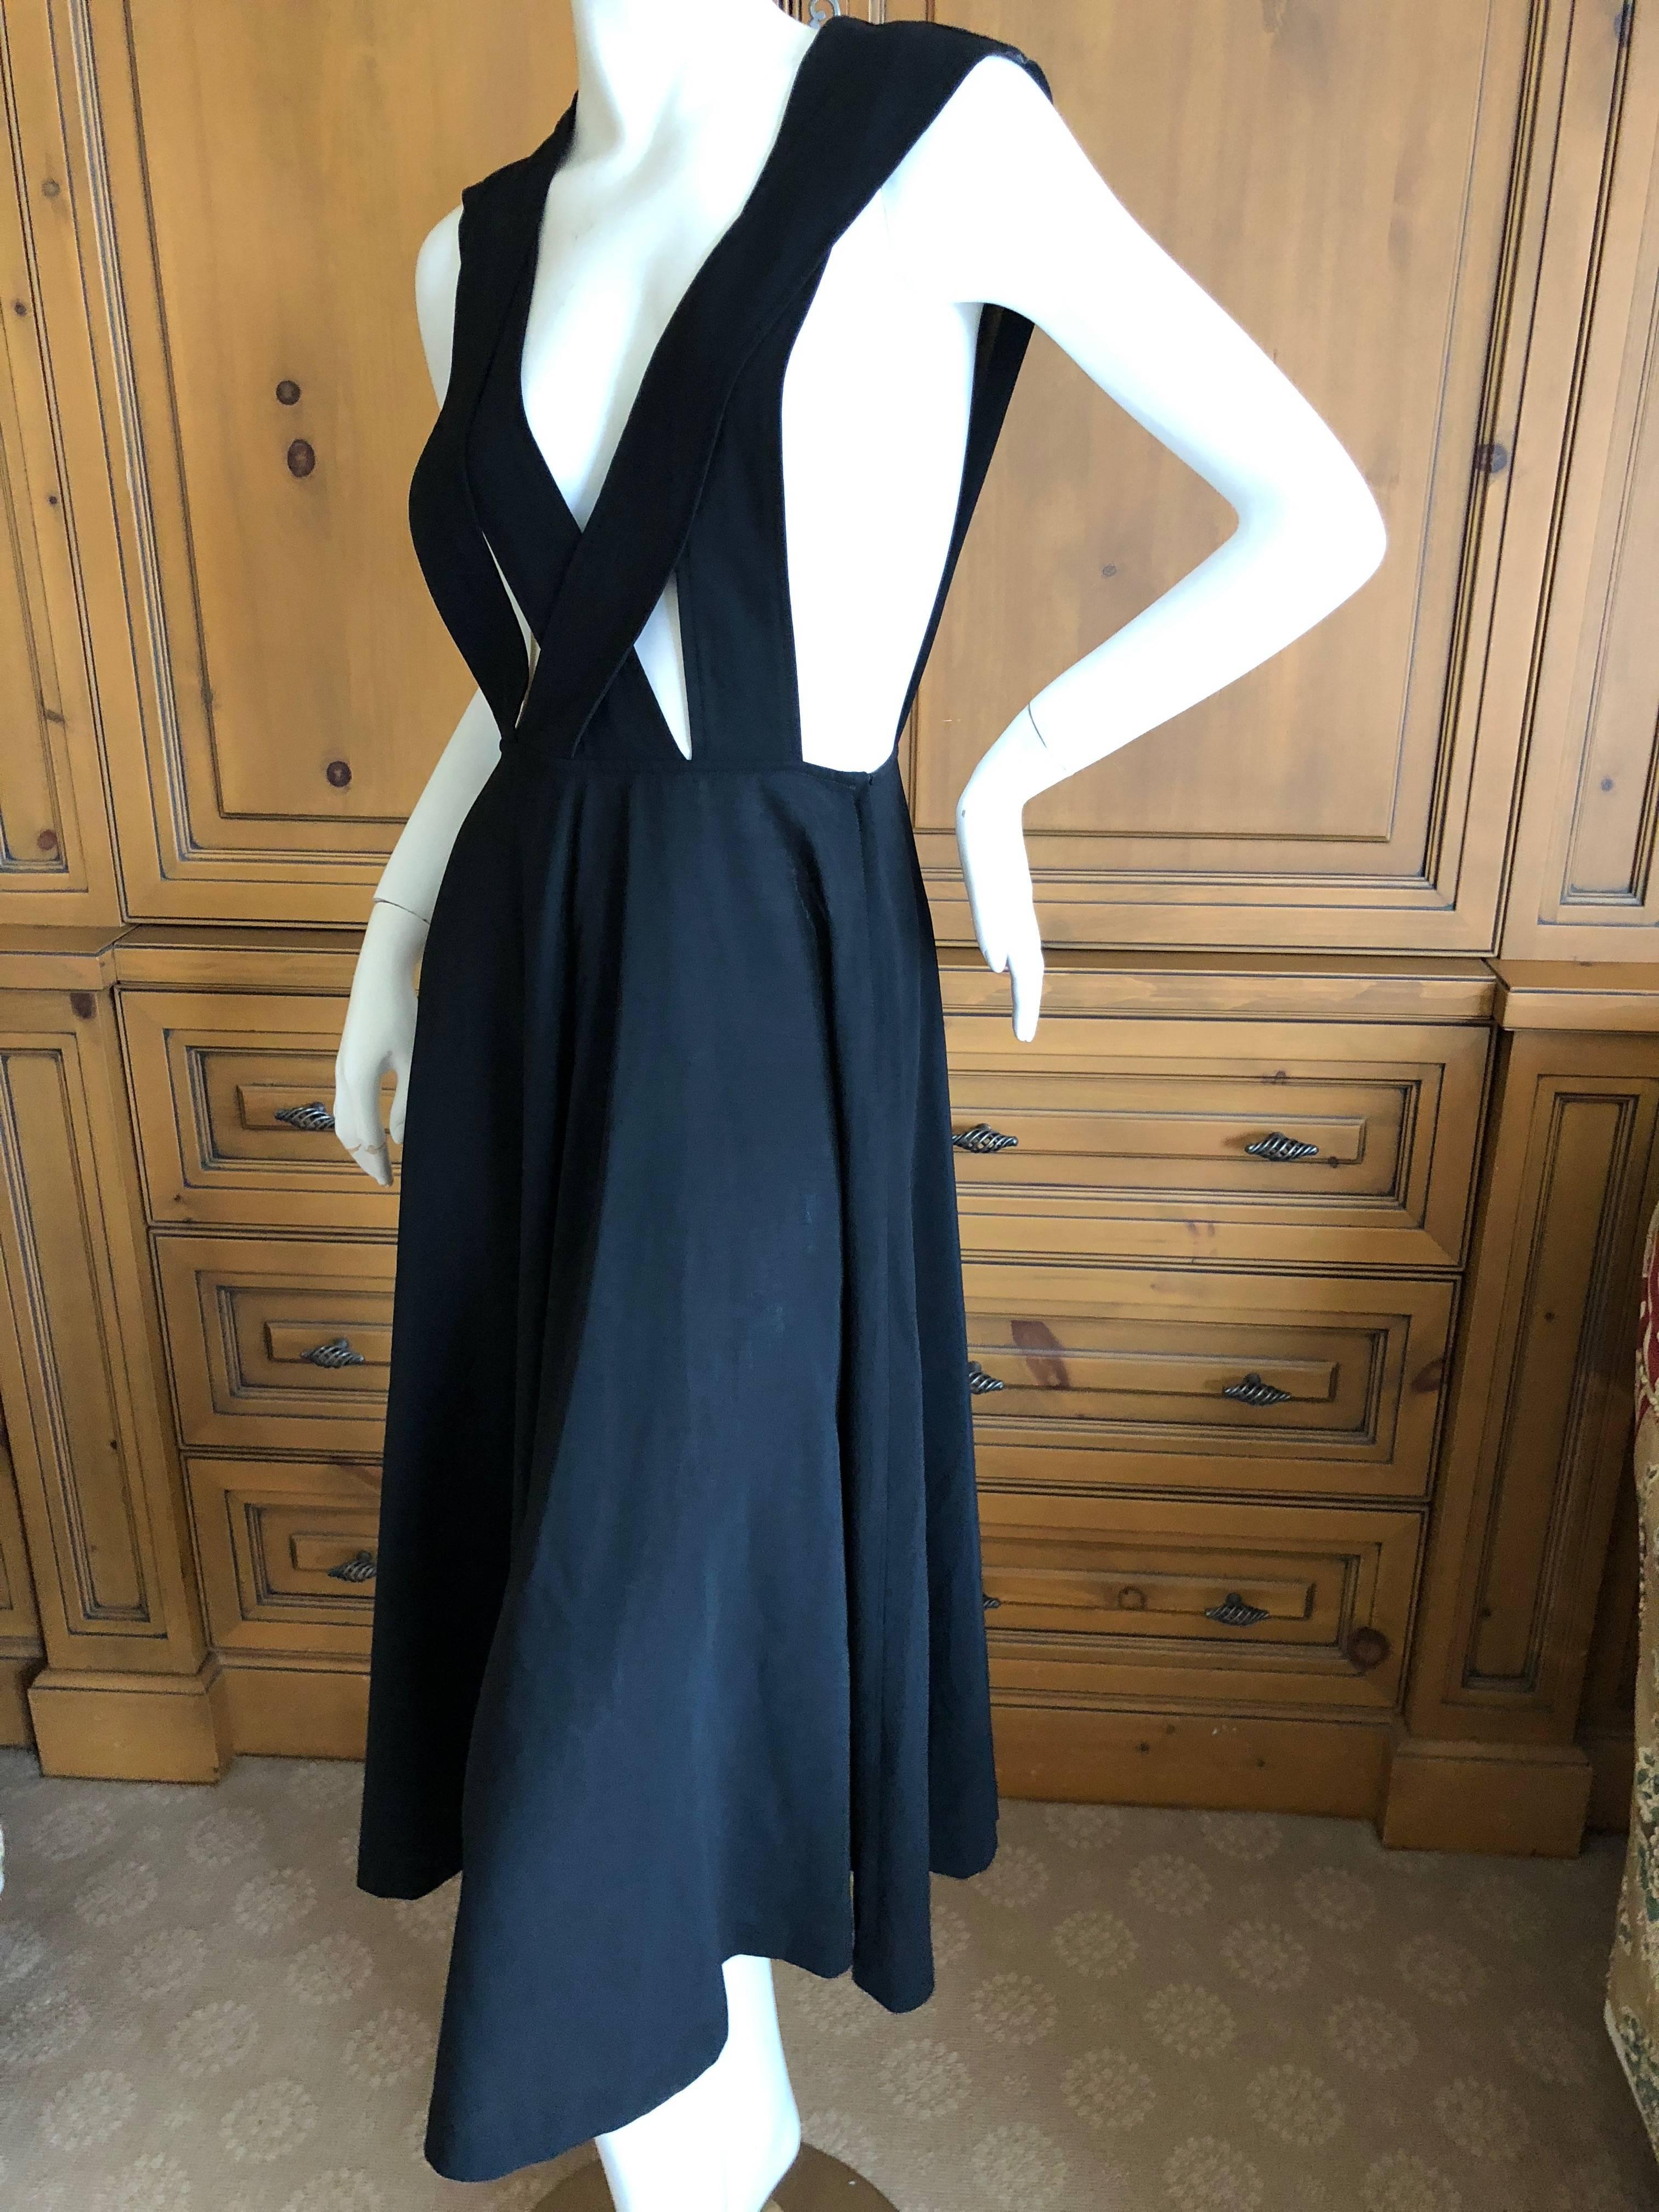 Tricot Comme des Garcons 1992 Black Bondage Dress.
Rei Kawakubo early secondary line.
100% wool.
 Size M
Bust 38